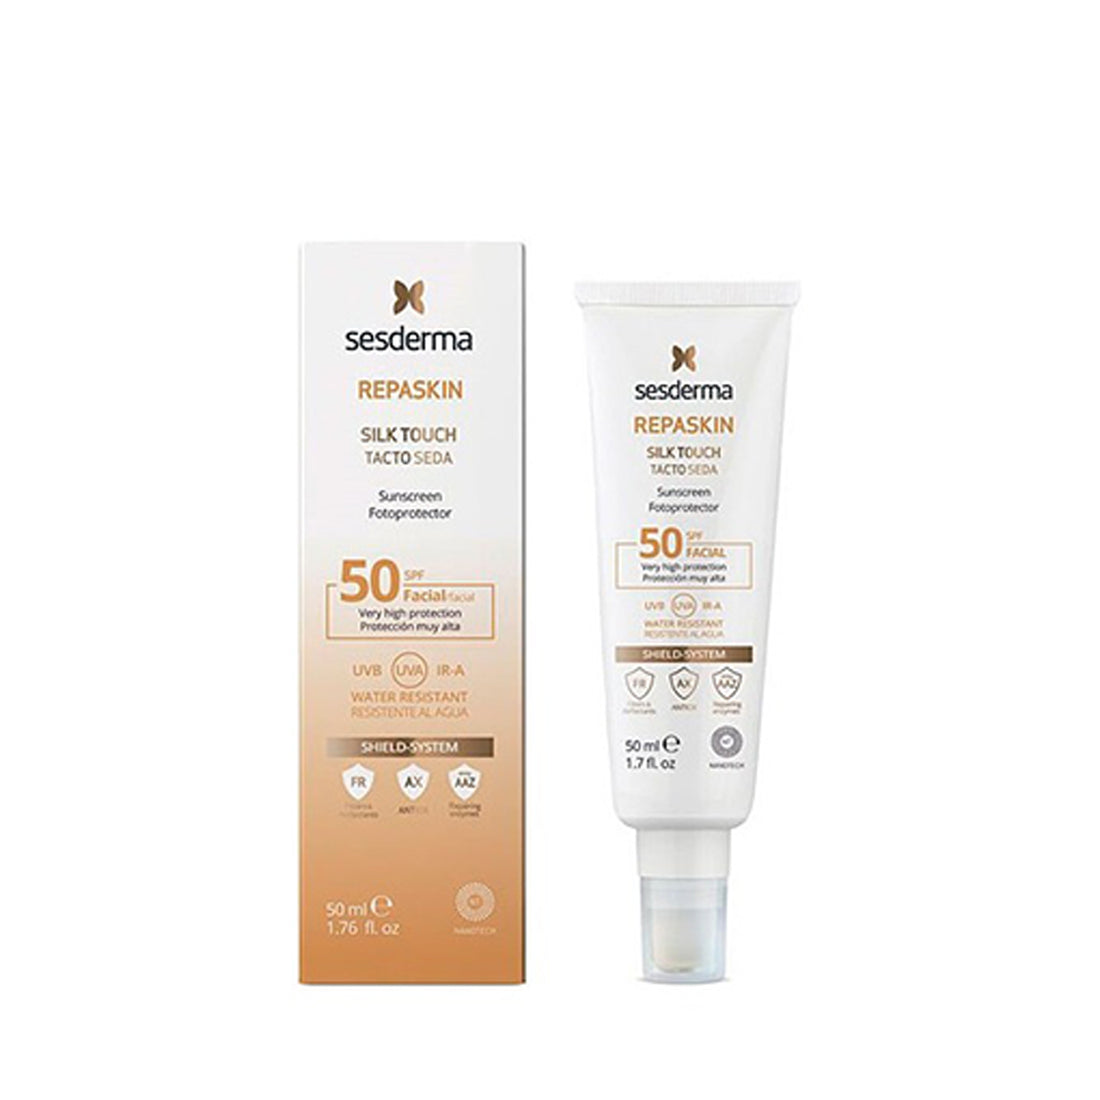 Sesderma Repaskin Silk Touch Facial Sunscreen SPF50 50ml (1.69fl oz)